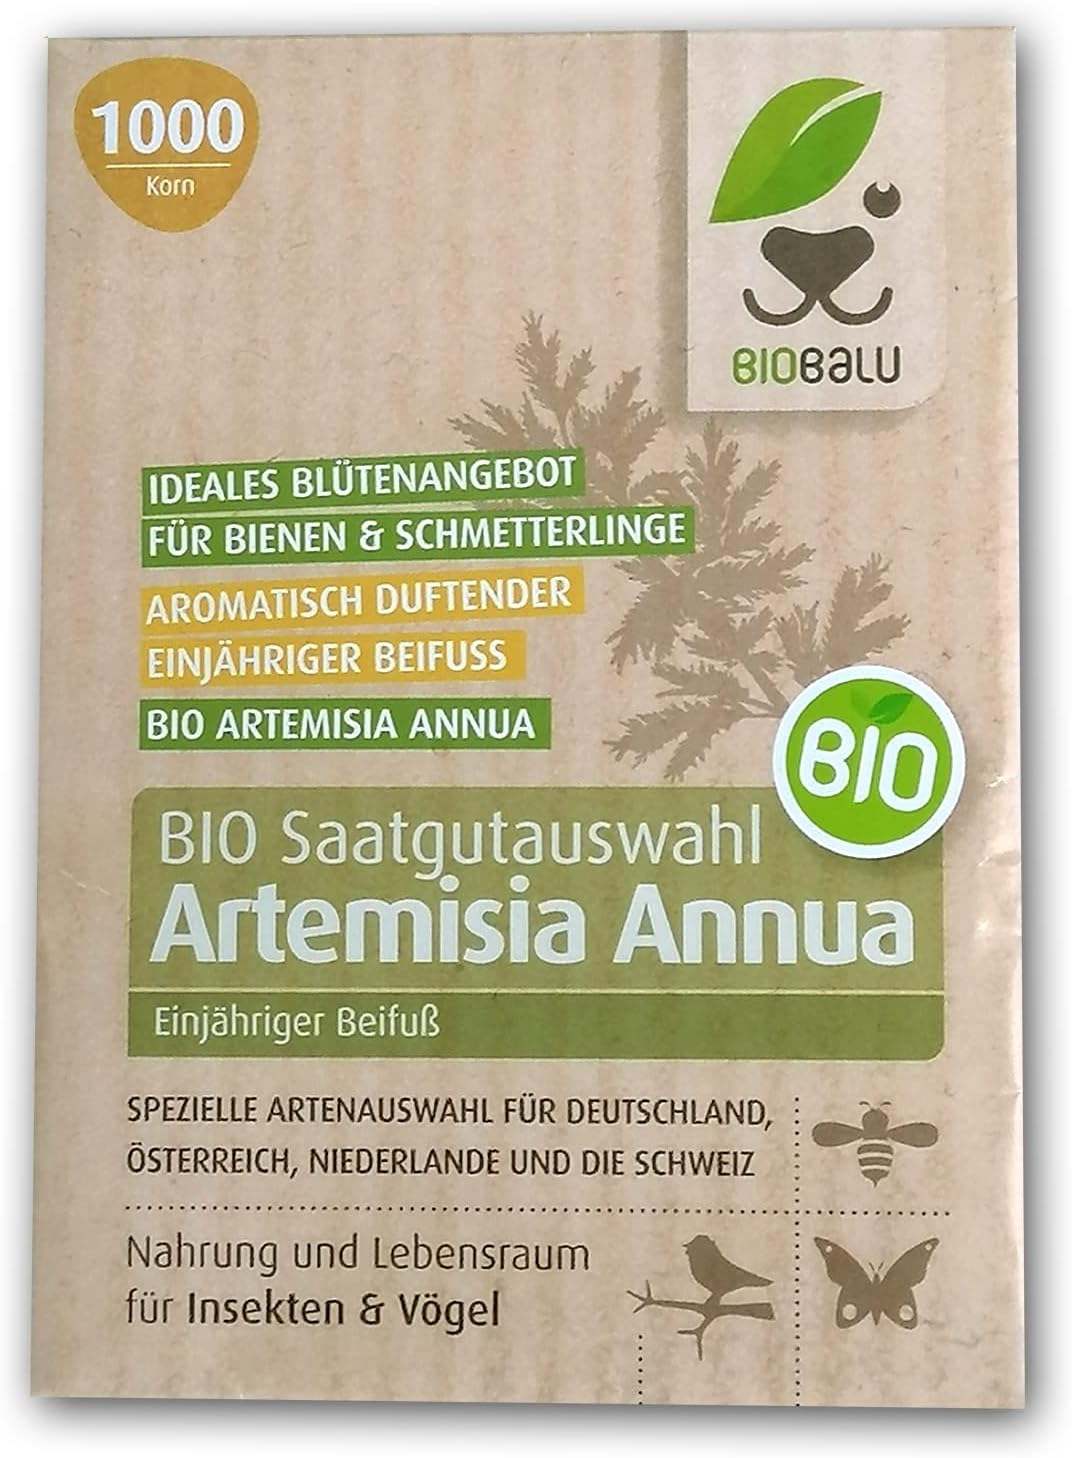 Biobalu Bio Artemisia Annua Saatgut aus Demeter Anbau (1000 Korn)